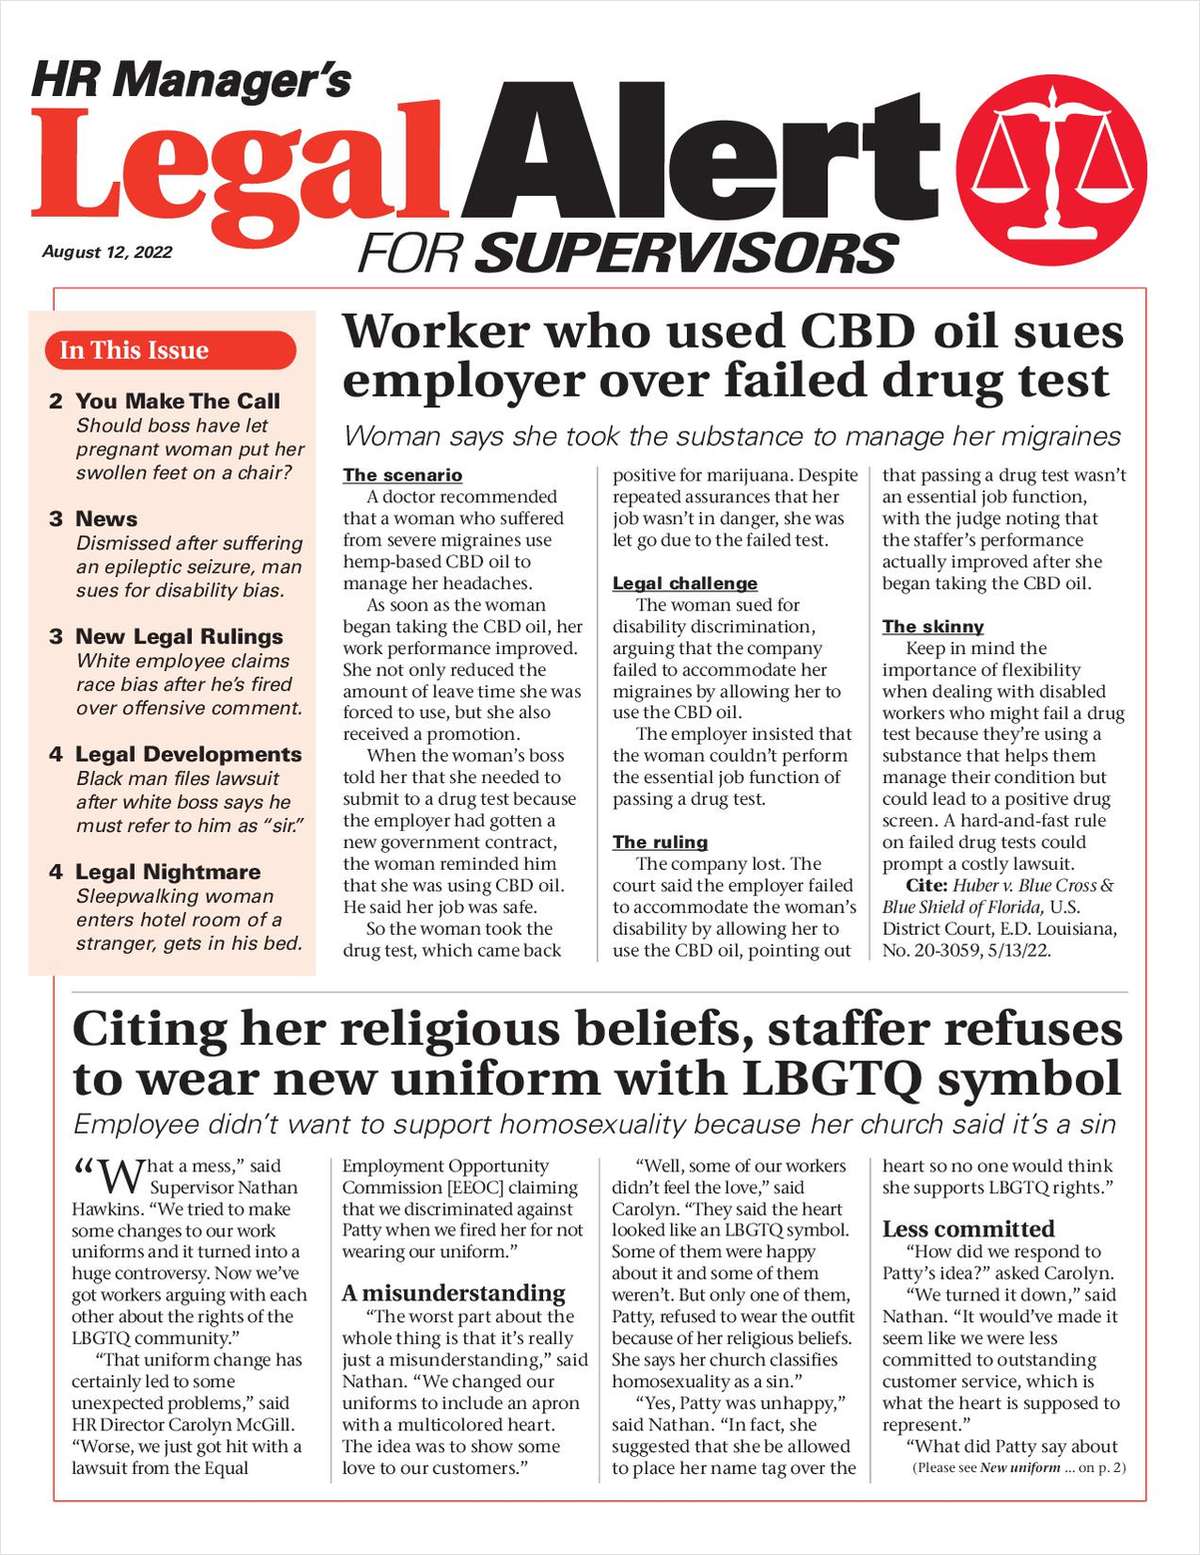 HR Manager's Legal Alert for Supervisors Newsletter: August 12 Edition